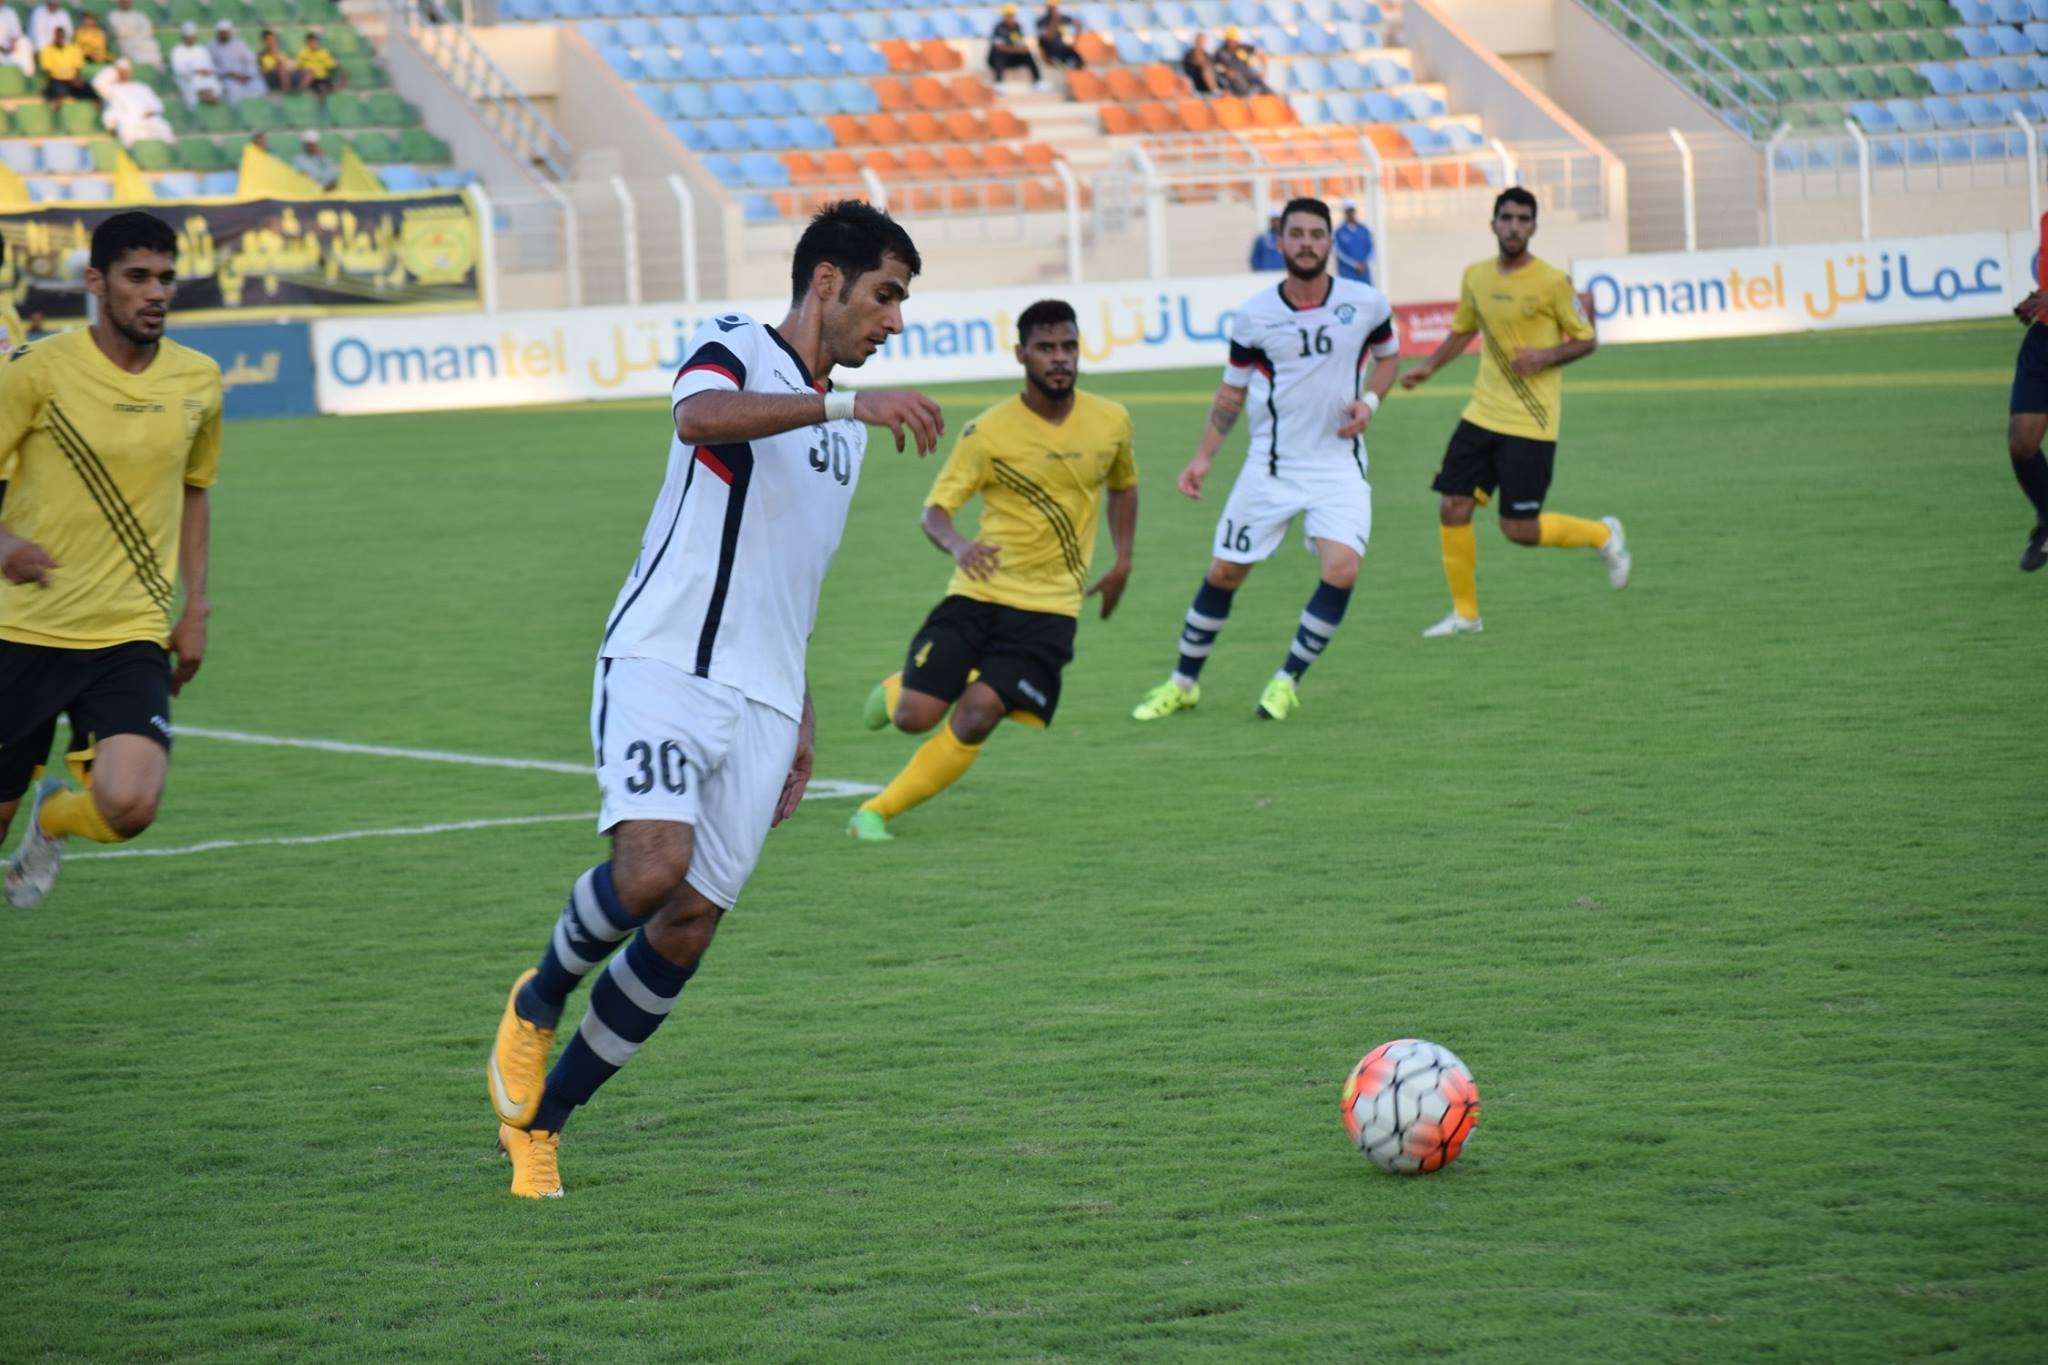 Oman Pro League game 2015